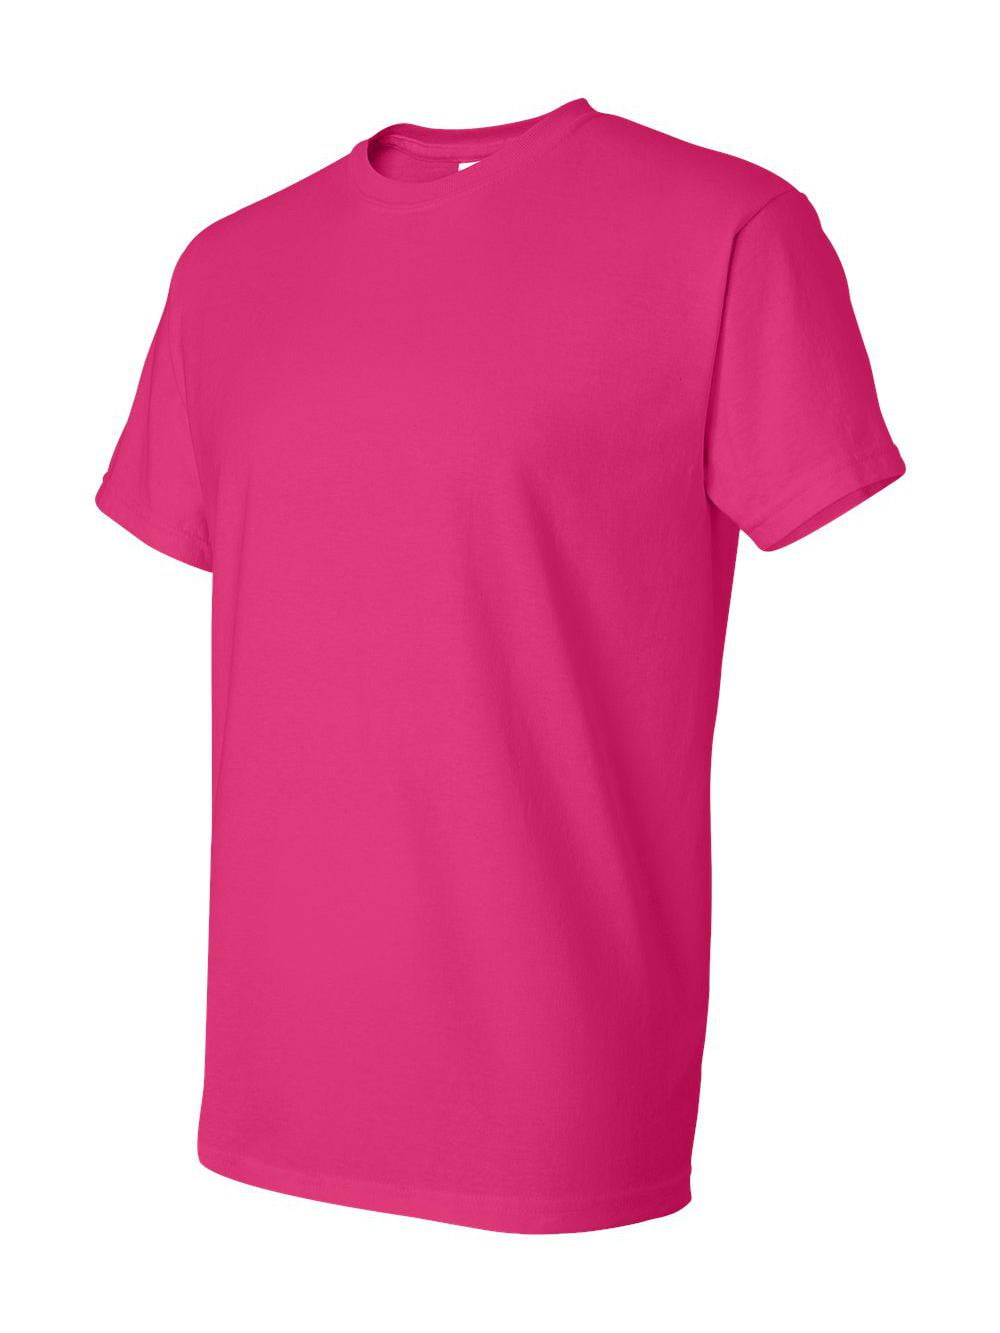 Gildan - DryBlend T-Shirt - 8000 - Heliconia - Size: 5XL - Walmart.com